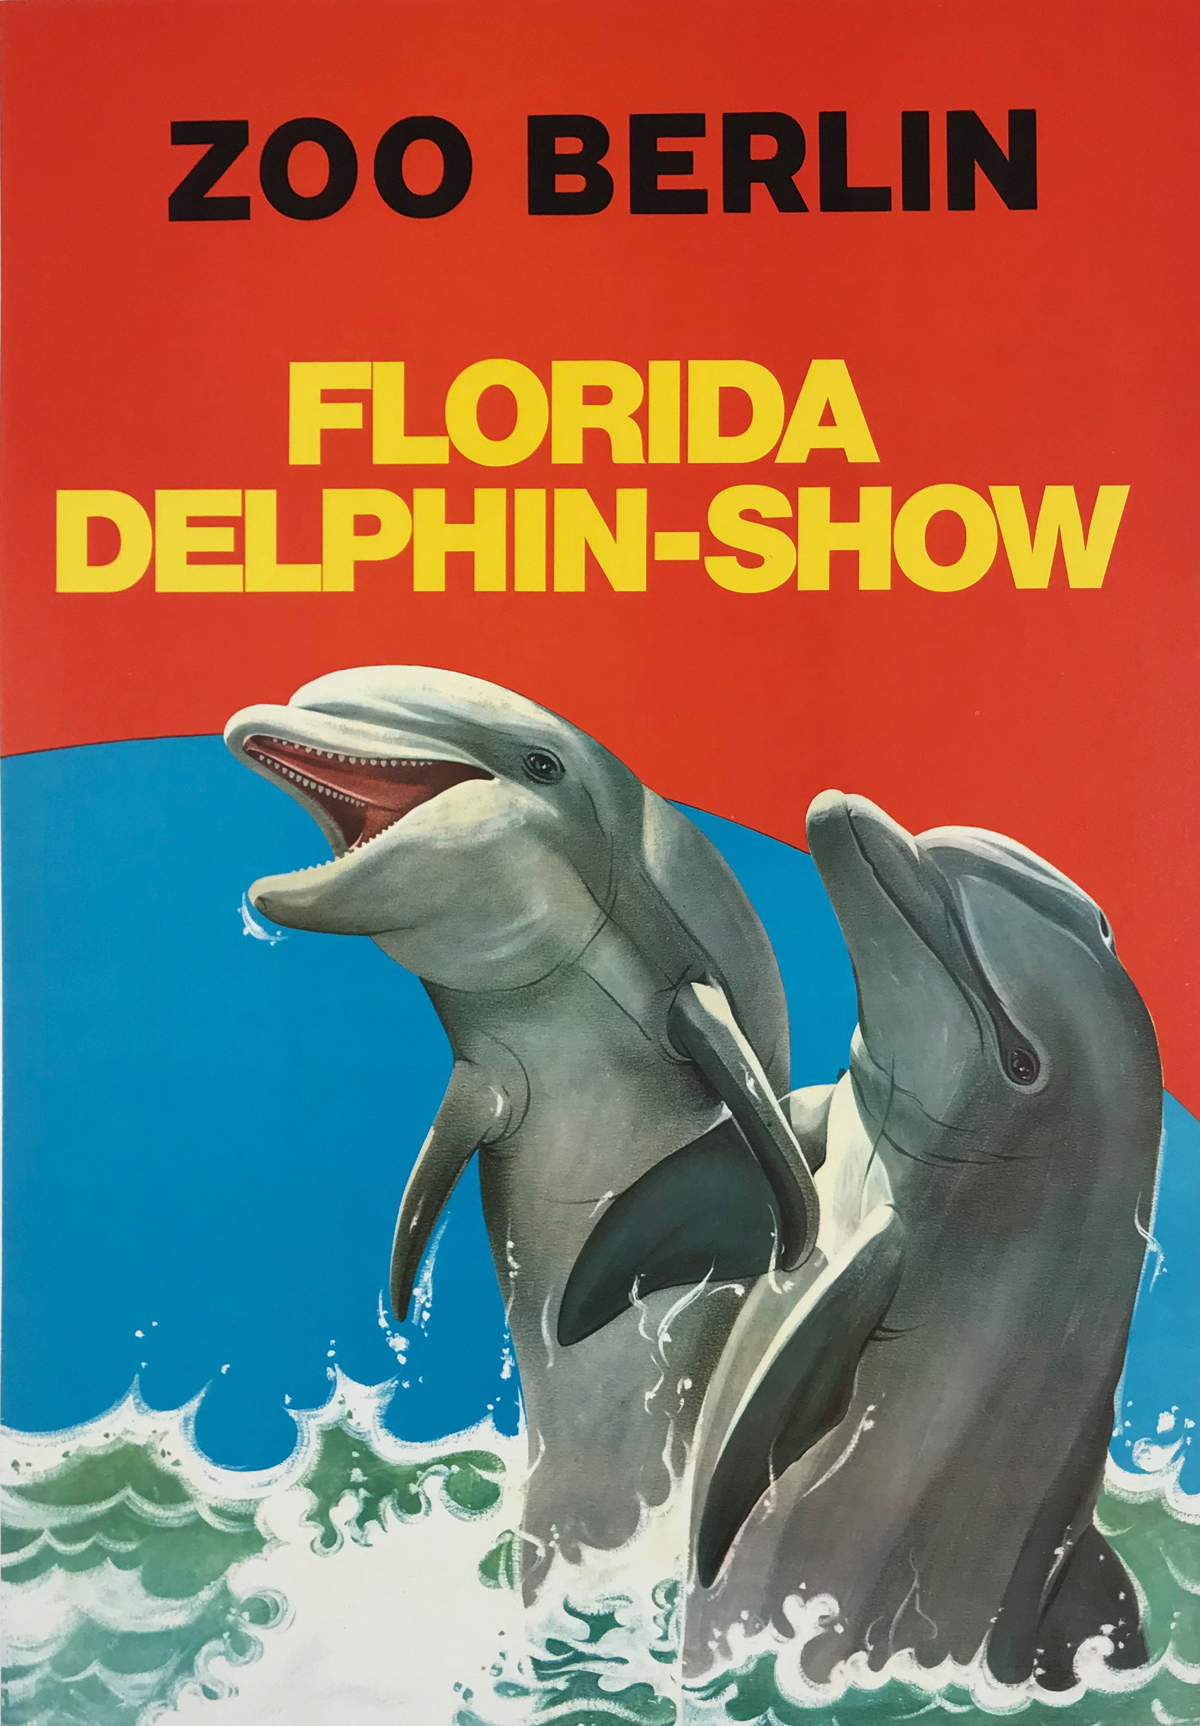 Zoo Berlin Florida Dolphin Show Original 1972 Vintage German Zoo Advertisement Travel Poster Linen Backed. 